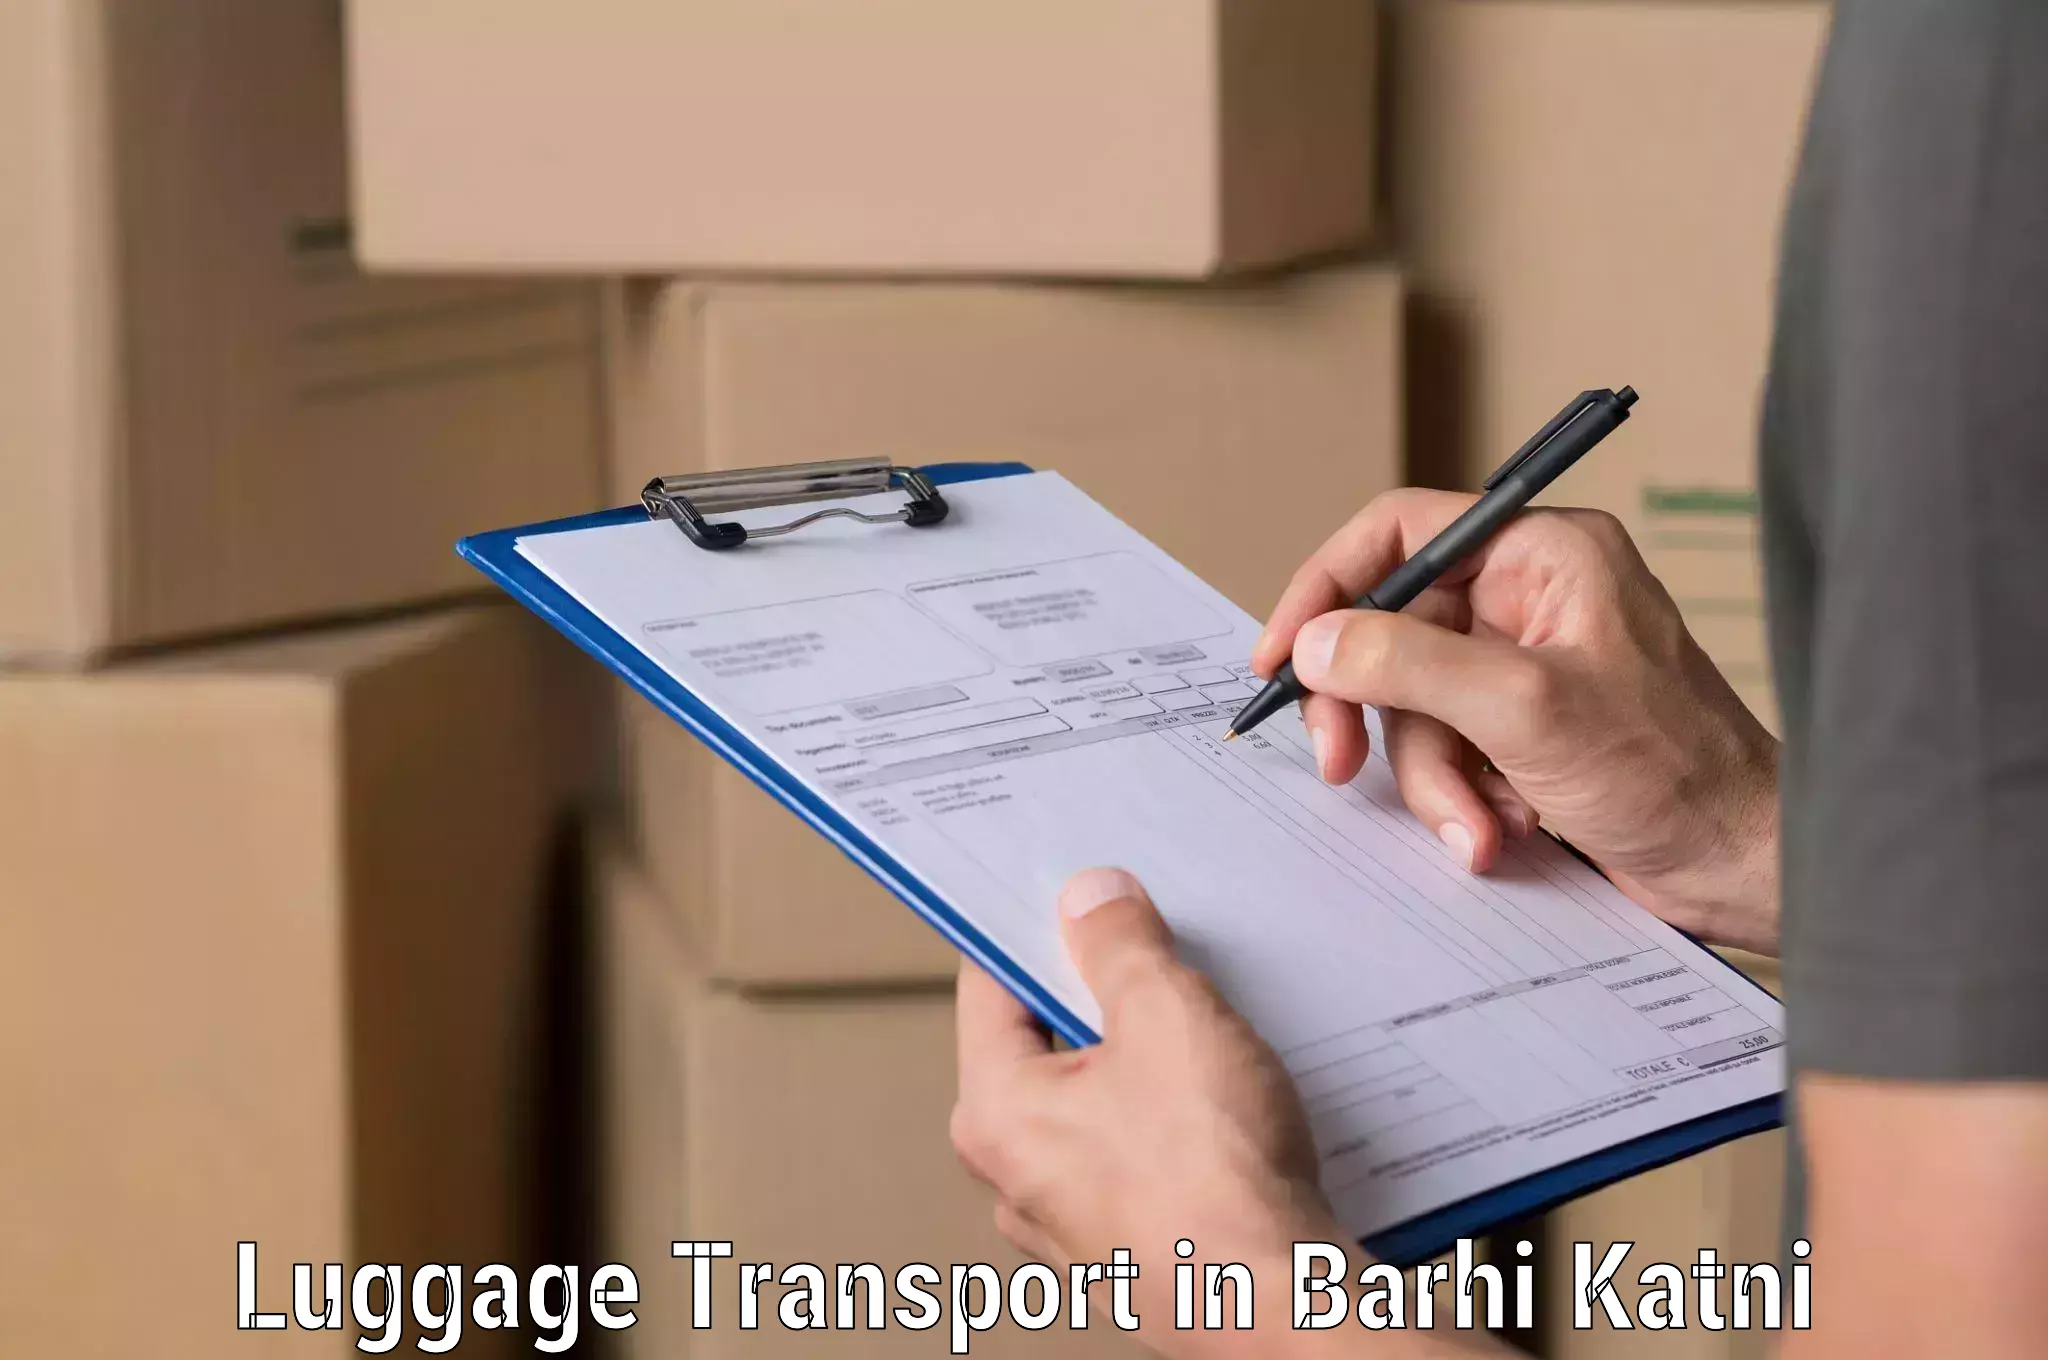 Luggage transport solutions in Barhi Katni